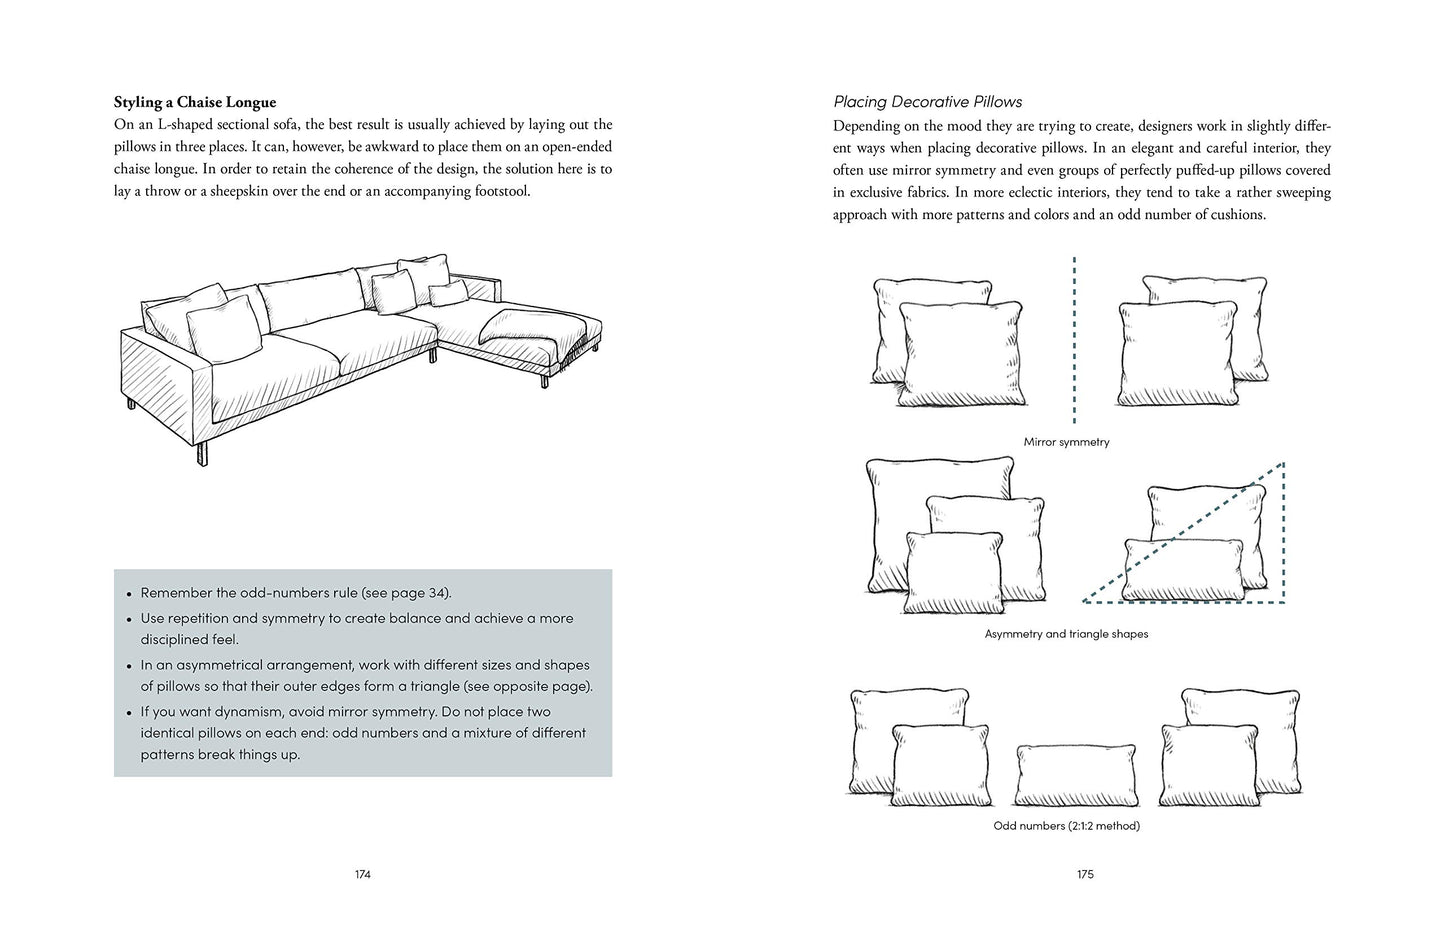 The Interior Design Coffee Table Book